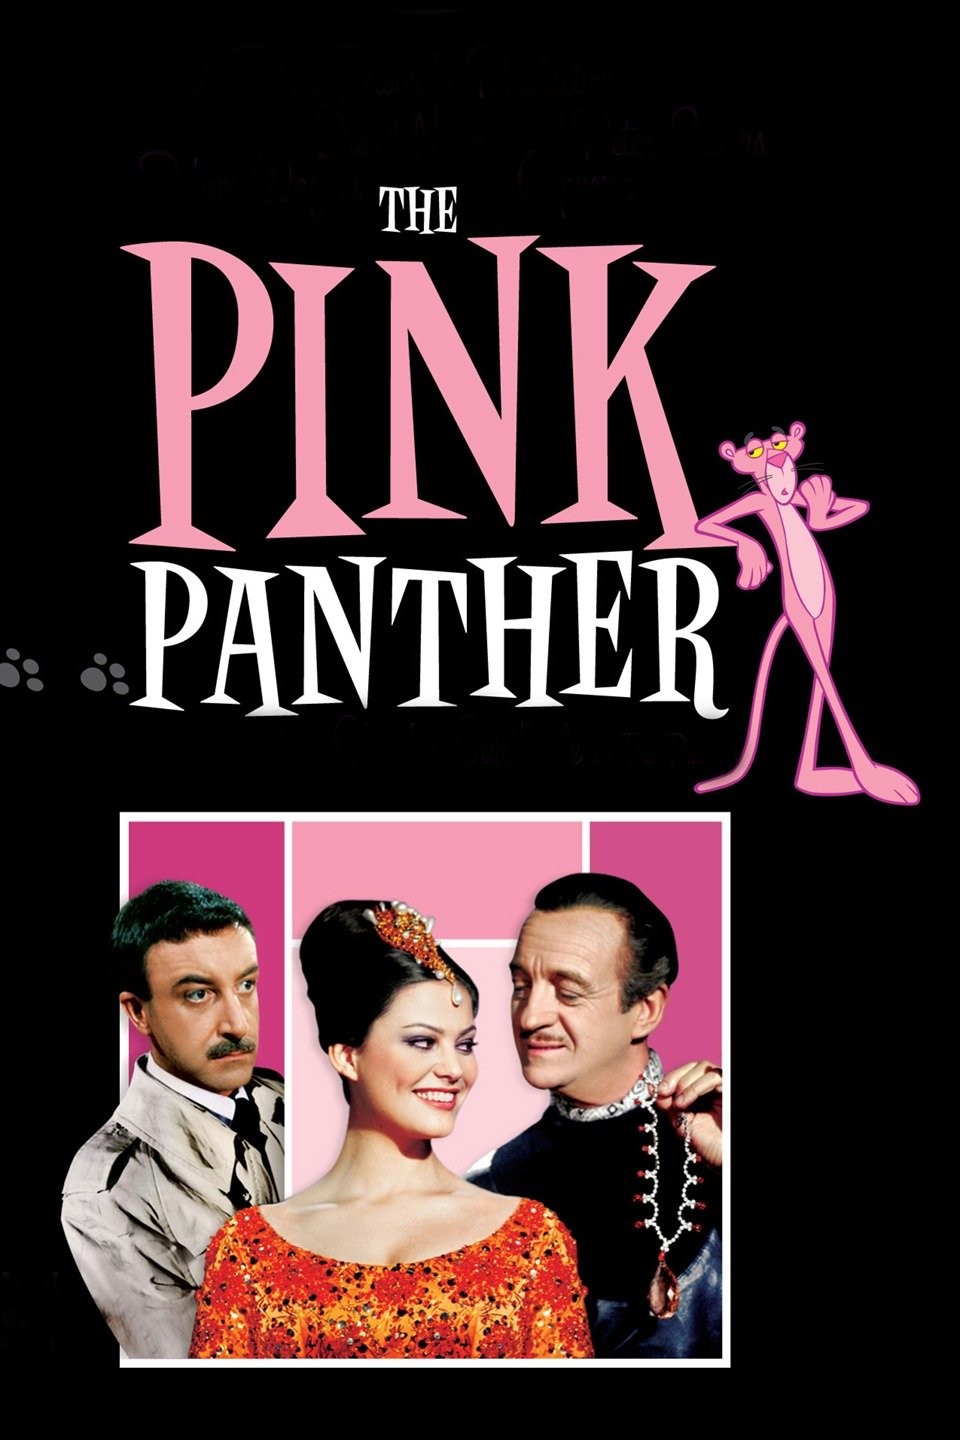 Vogue Cartoon Cover - Pink Panther Pop Art Poster